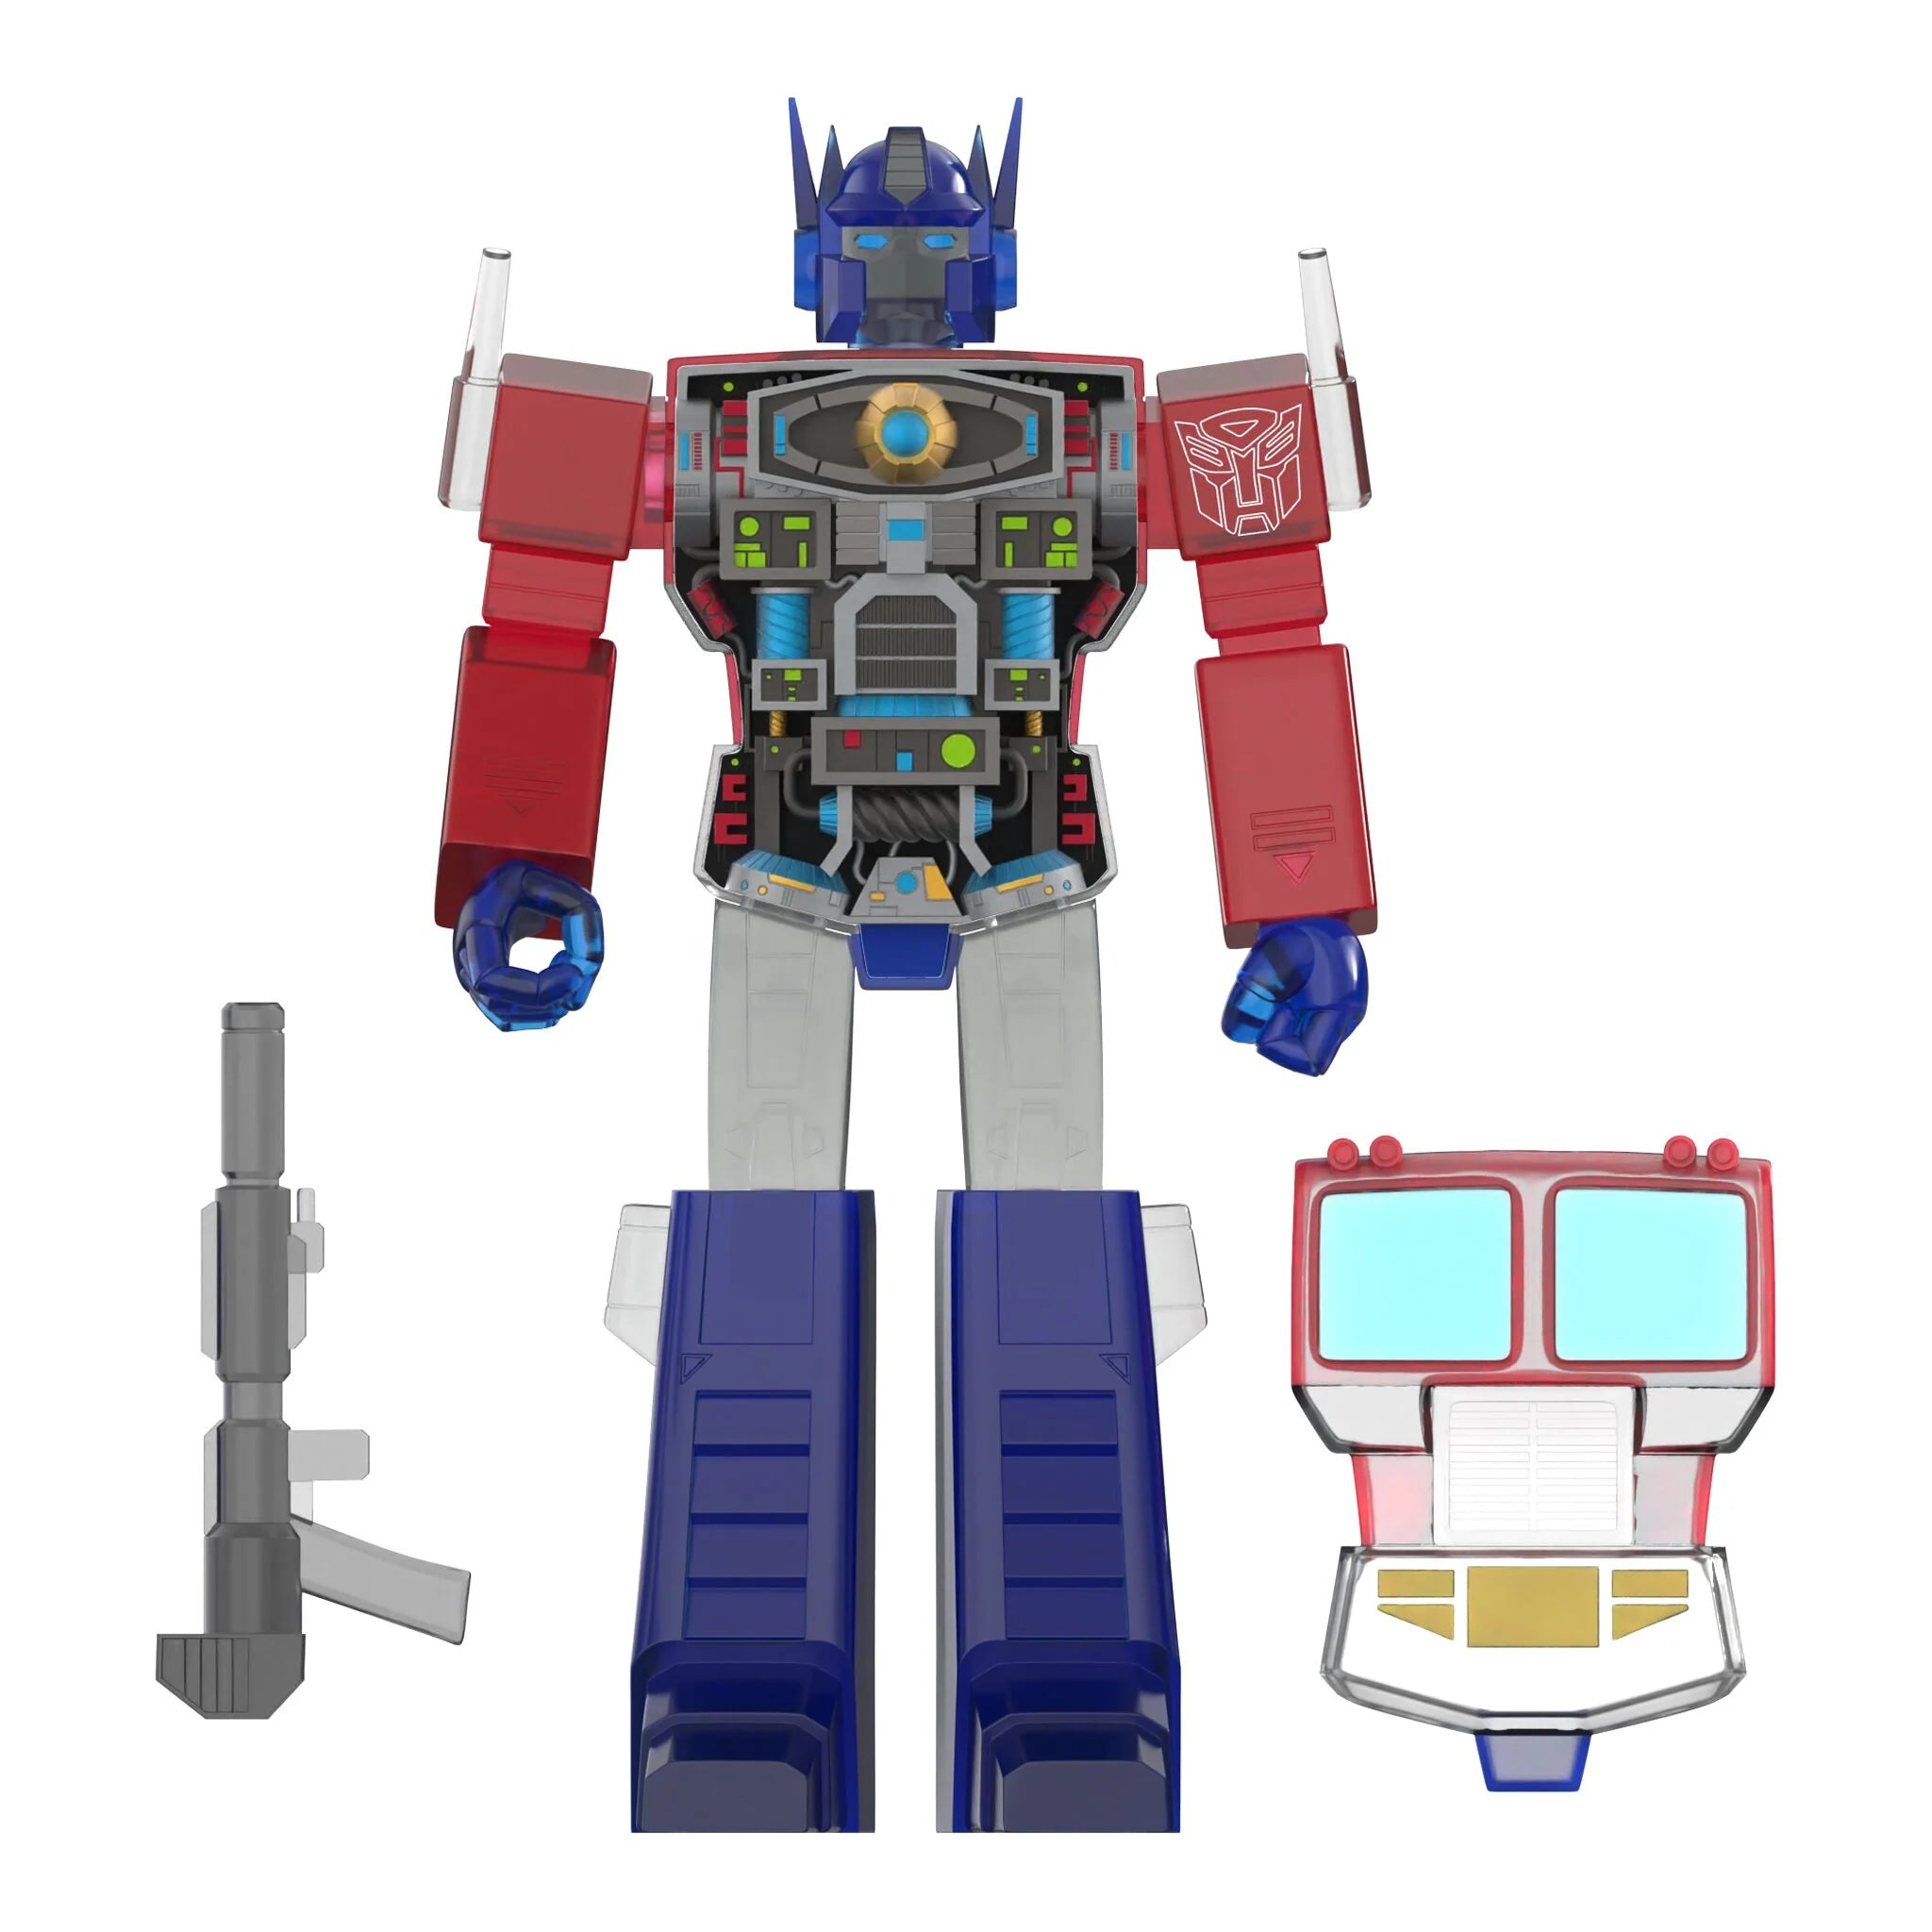 Super7 Super Cyborg: Transformers - Optimus Prime Rojo y Azul